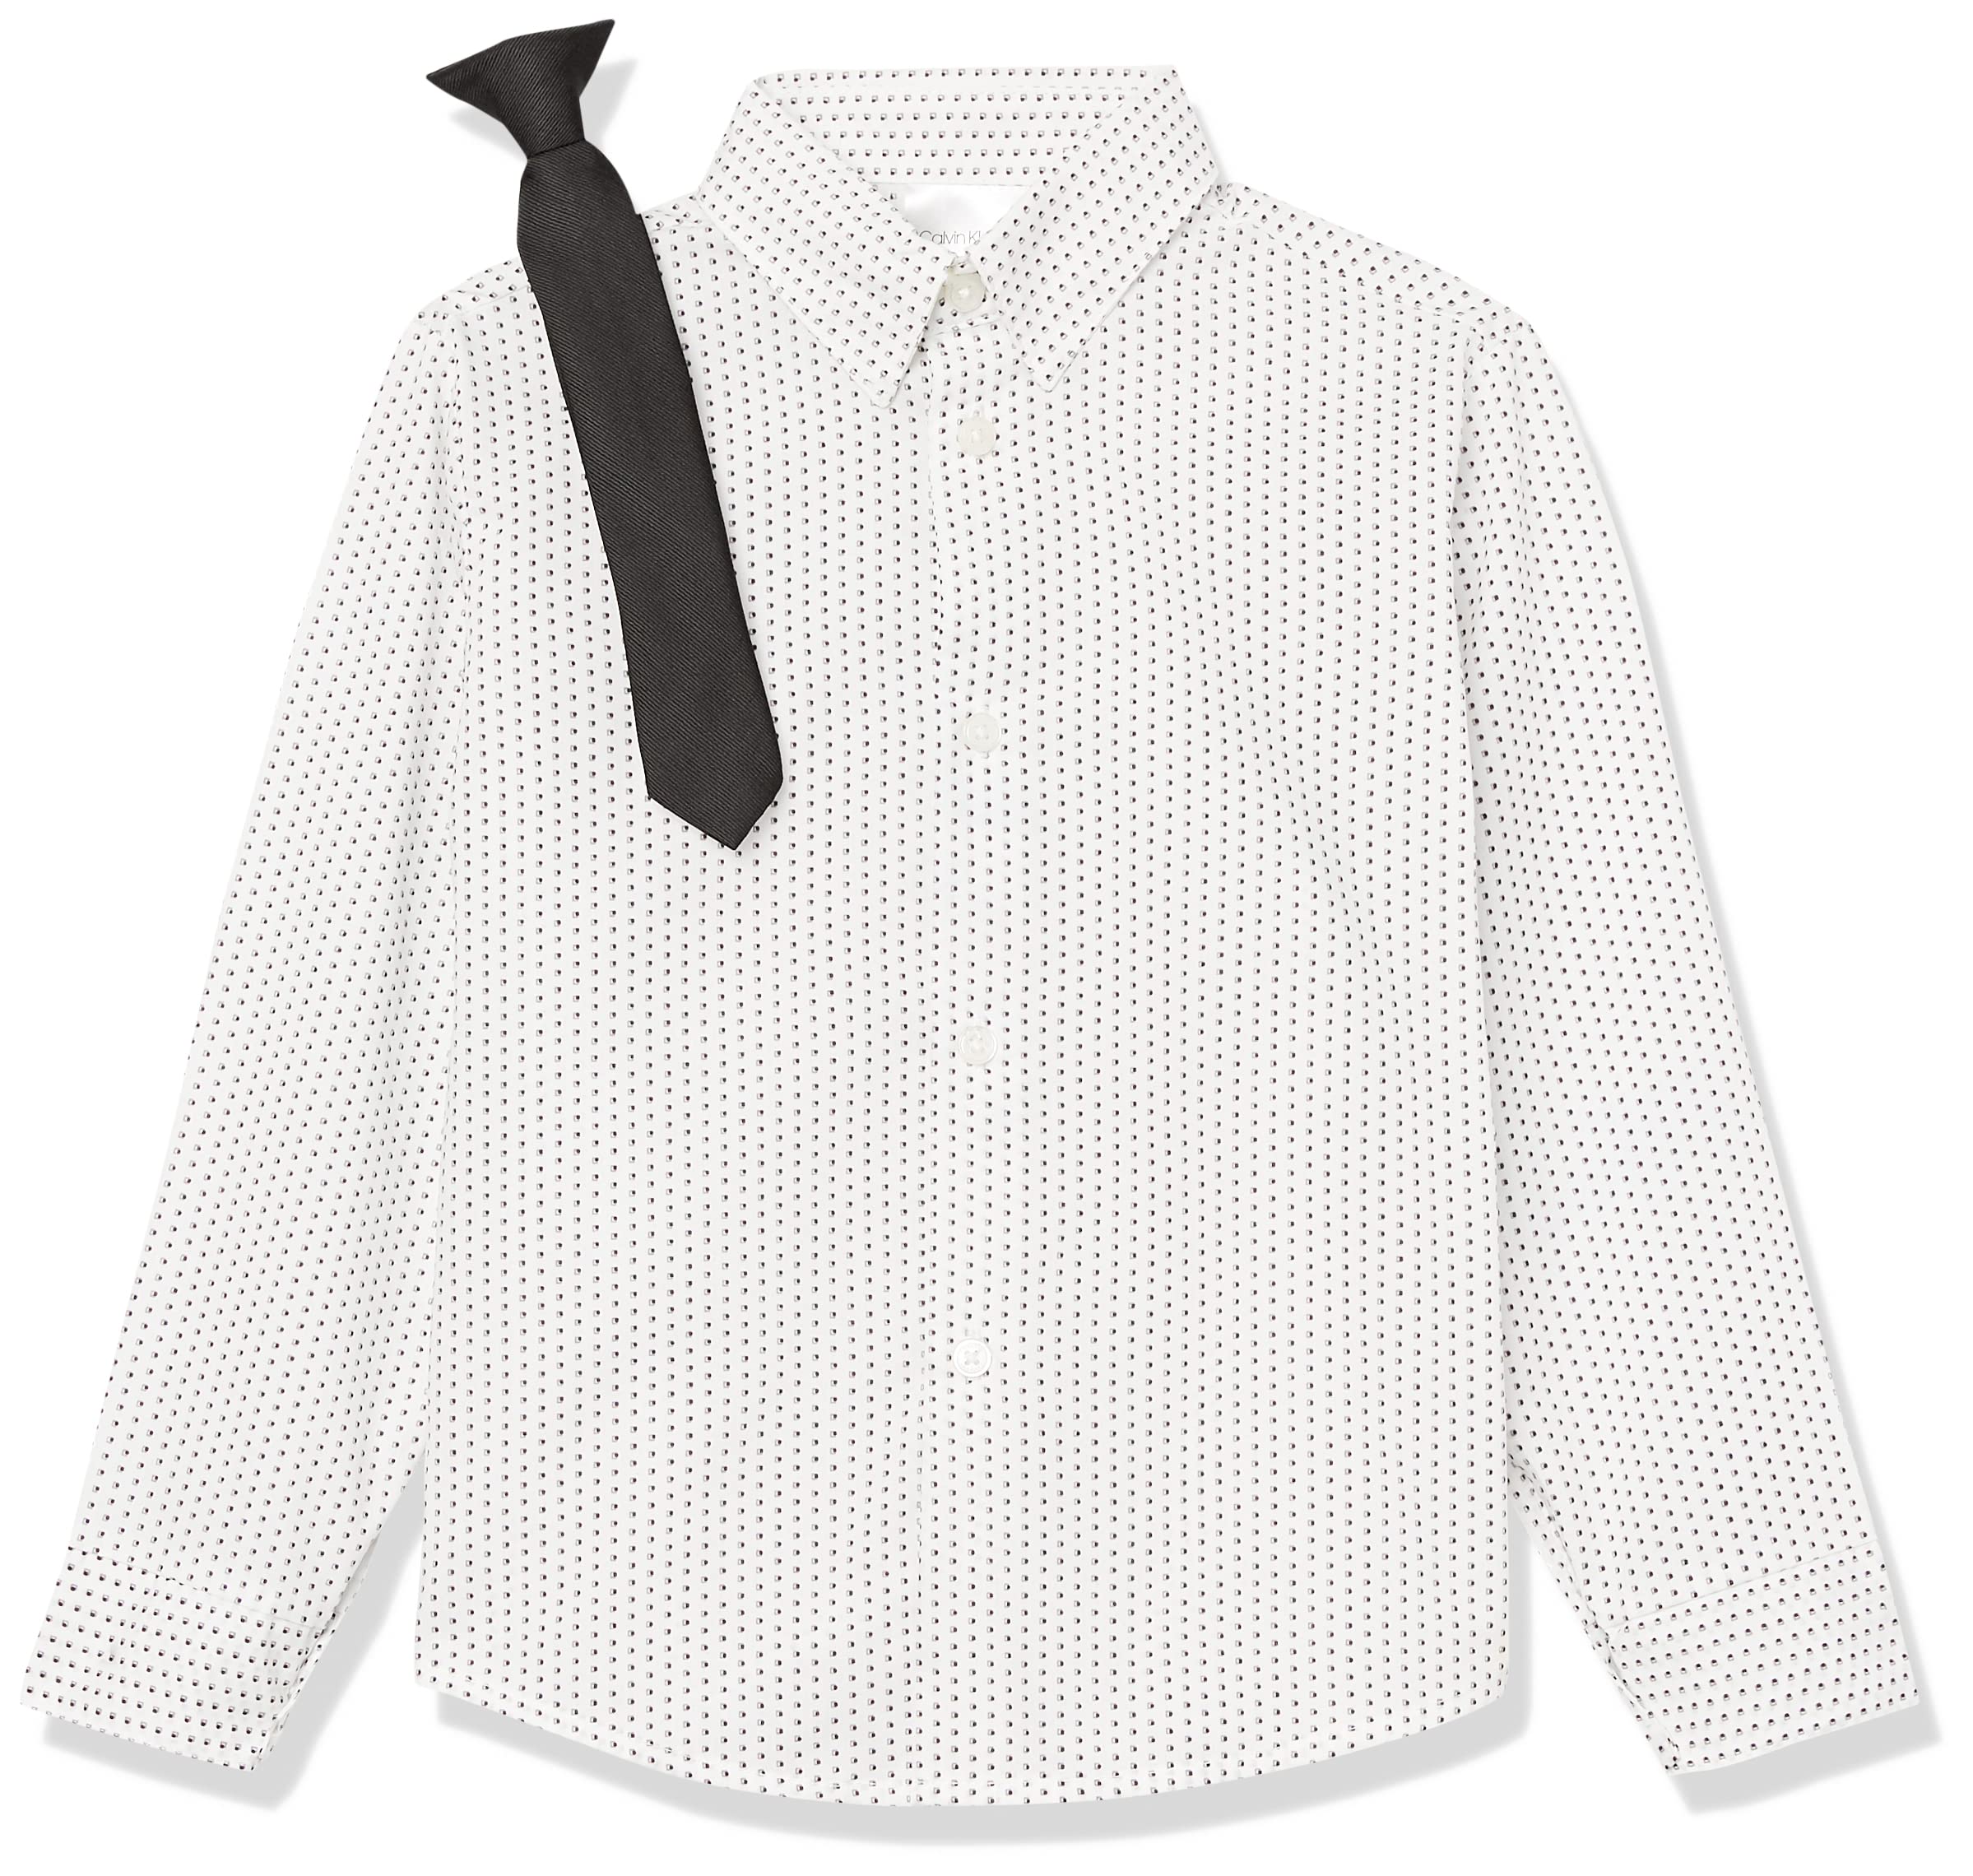 Calvin Klein Boys' 4-Piece Formal Suit Set, Vest, Pants, Collared Dress Shirt, and Tie